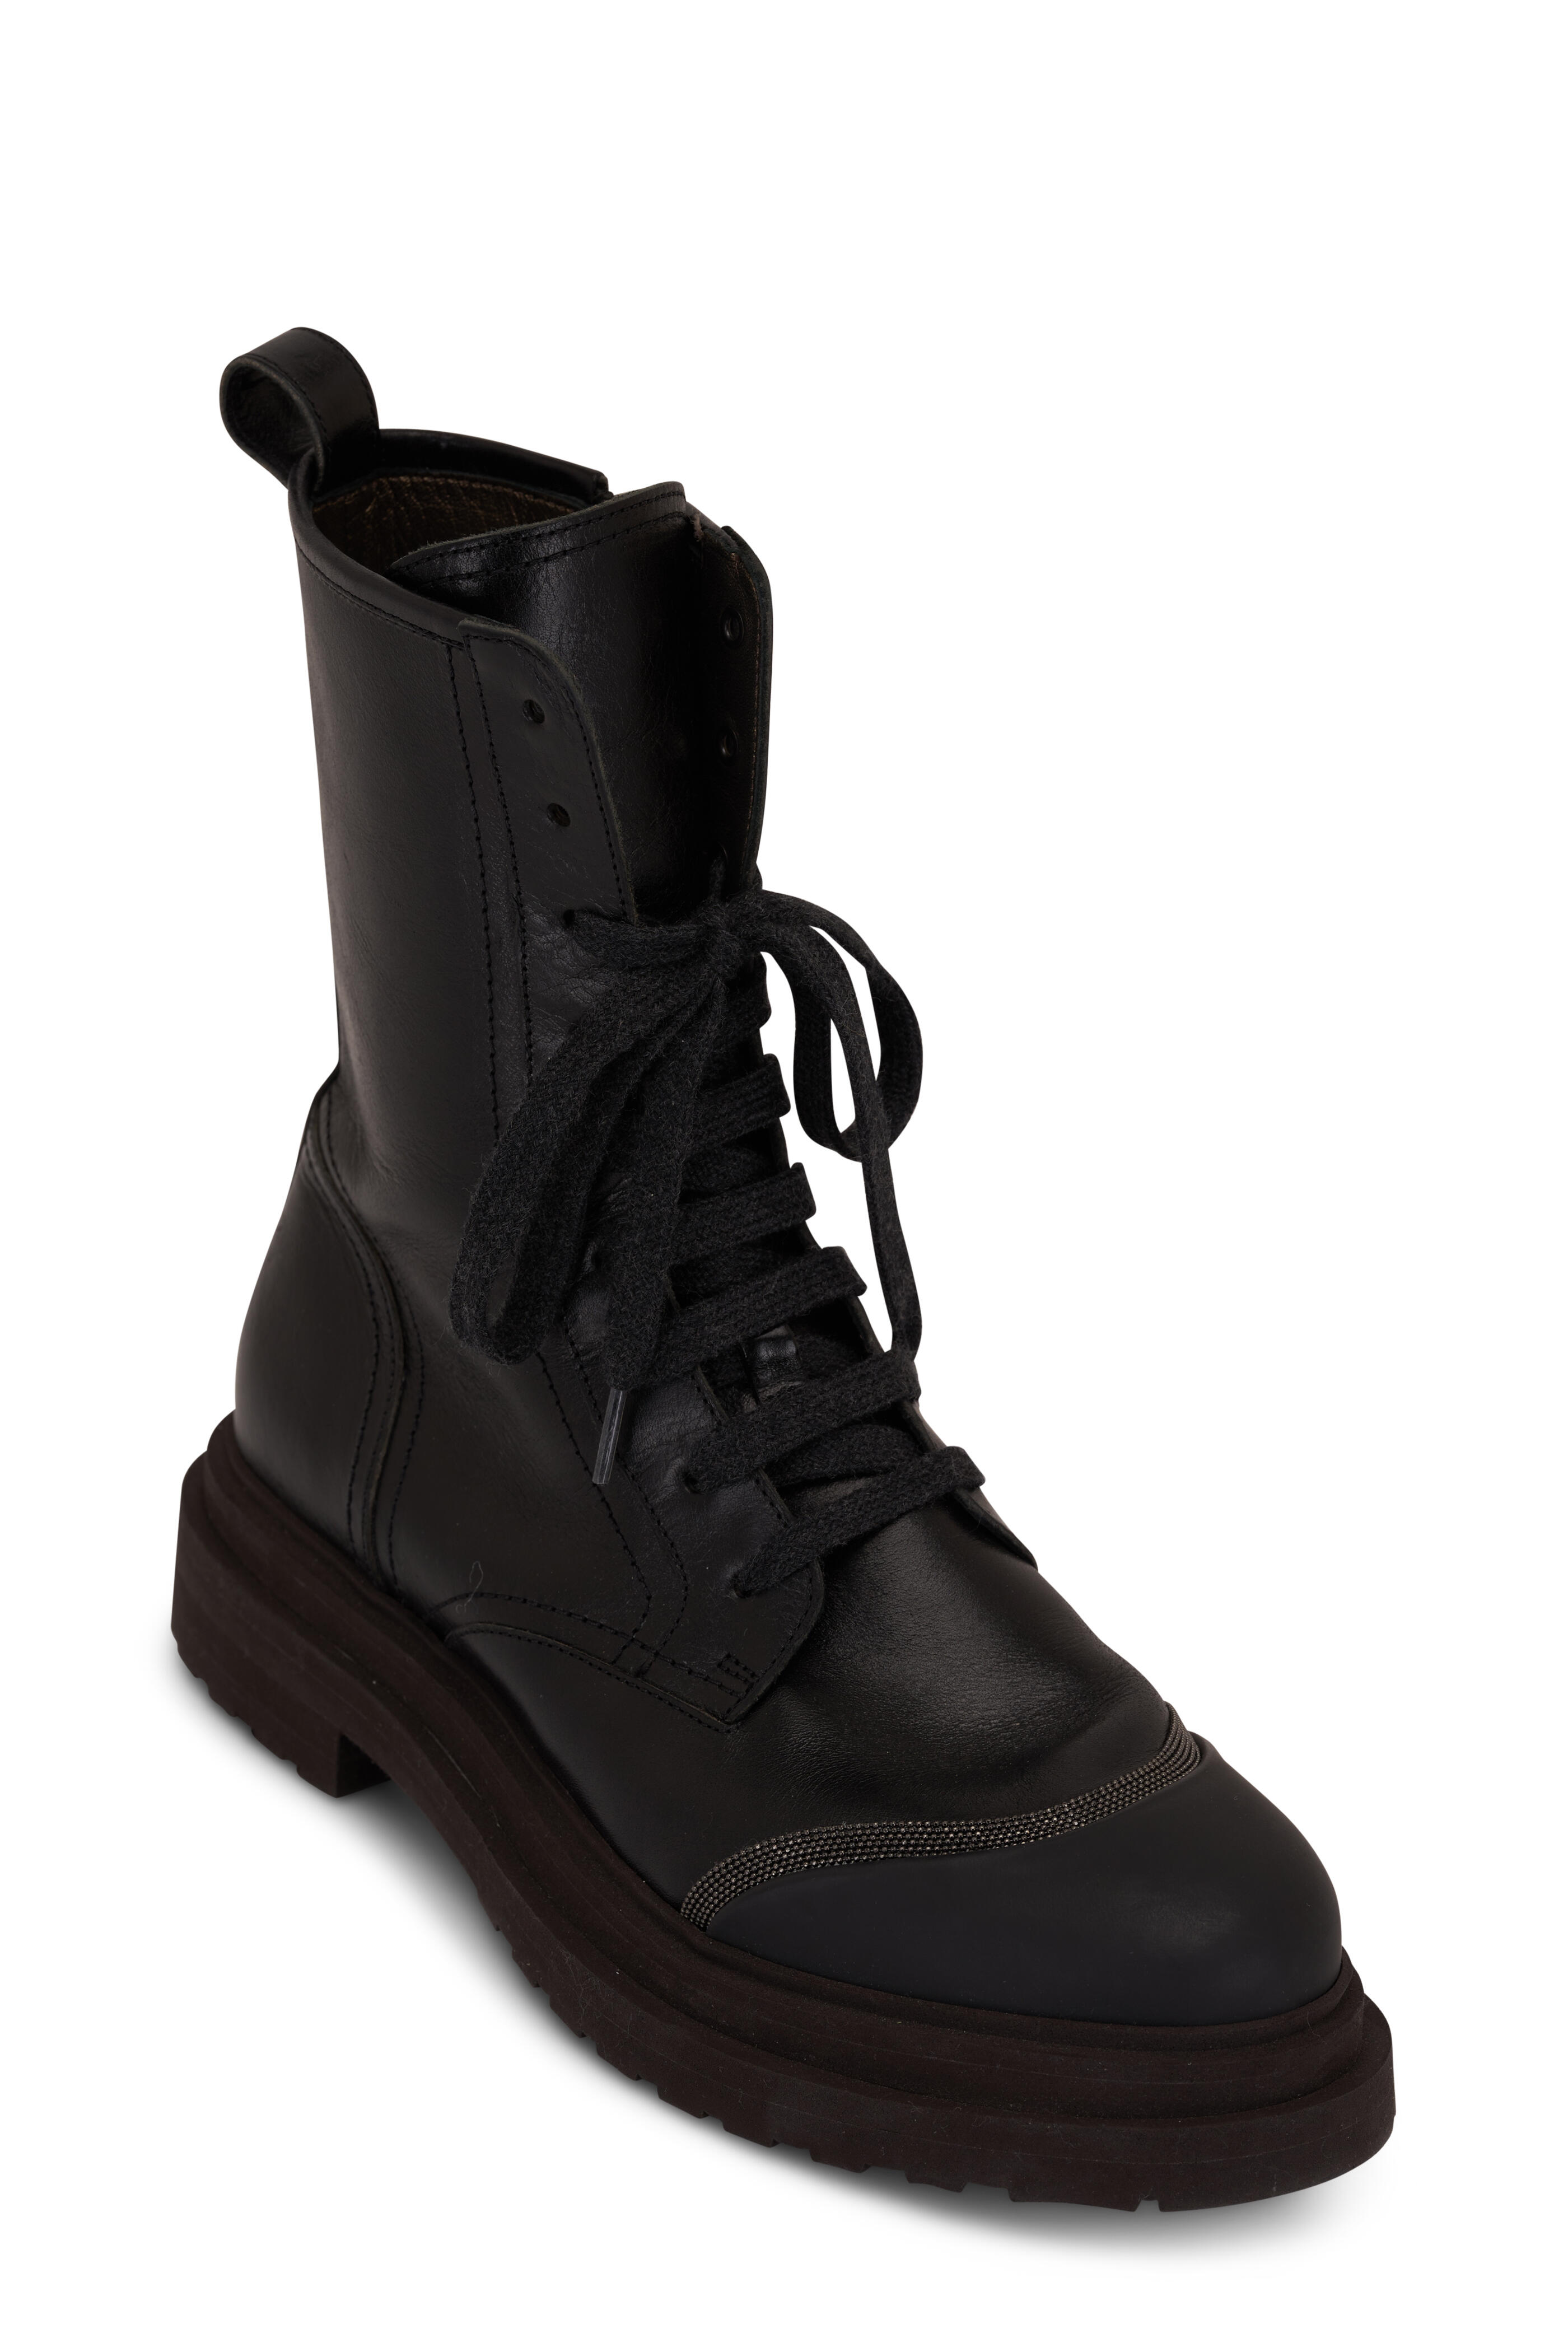 Brunello Cucinelli - Black Leather Lace Up Combat Boot